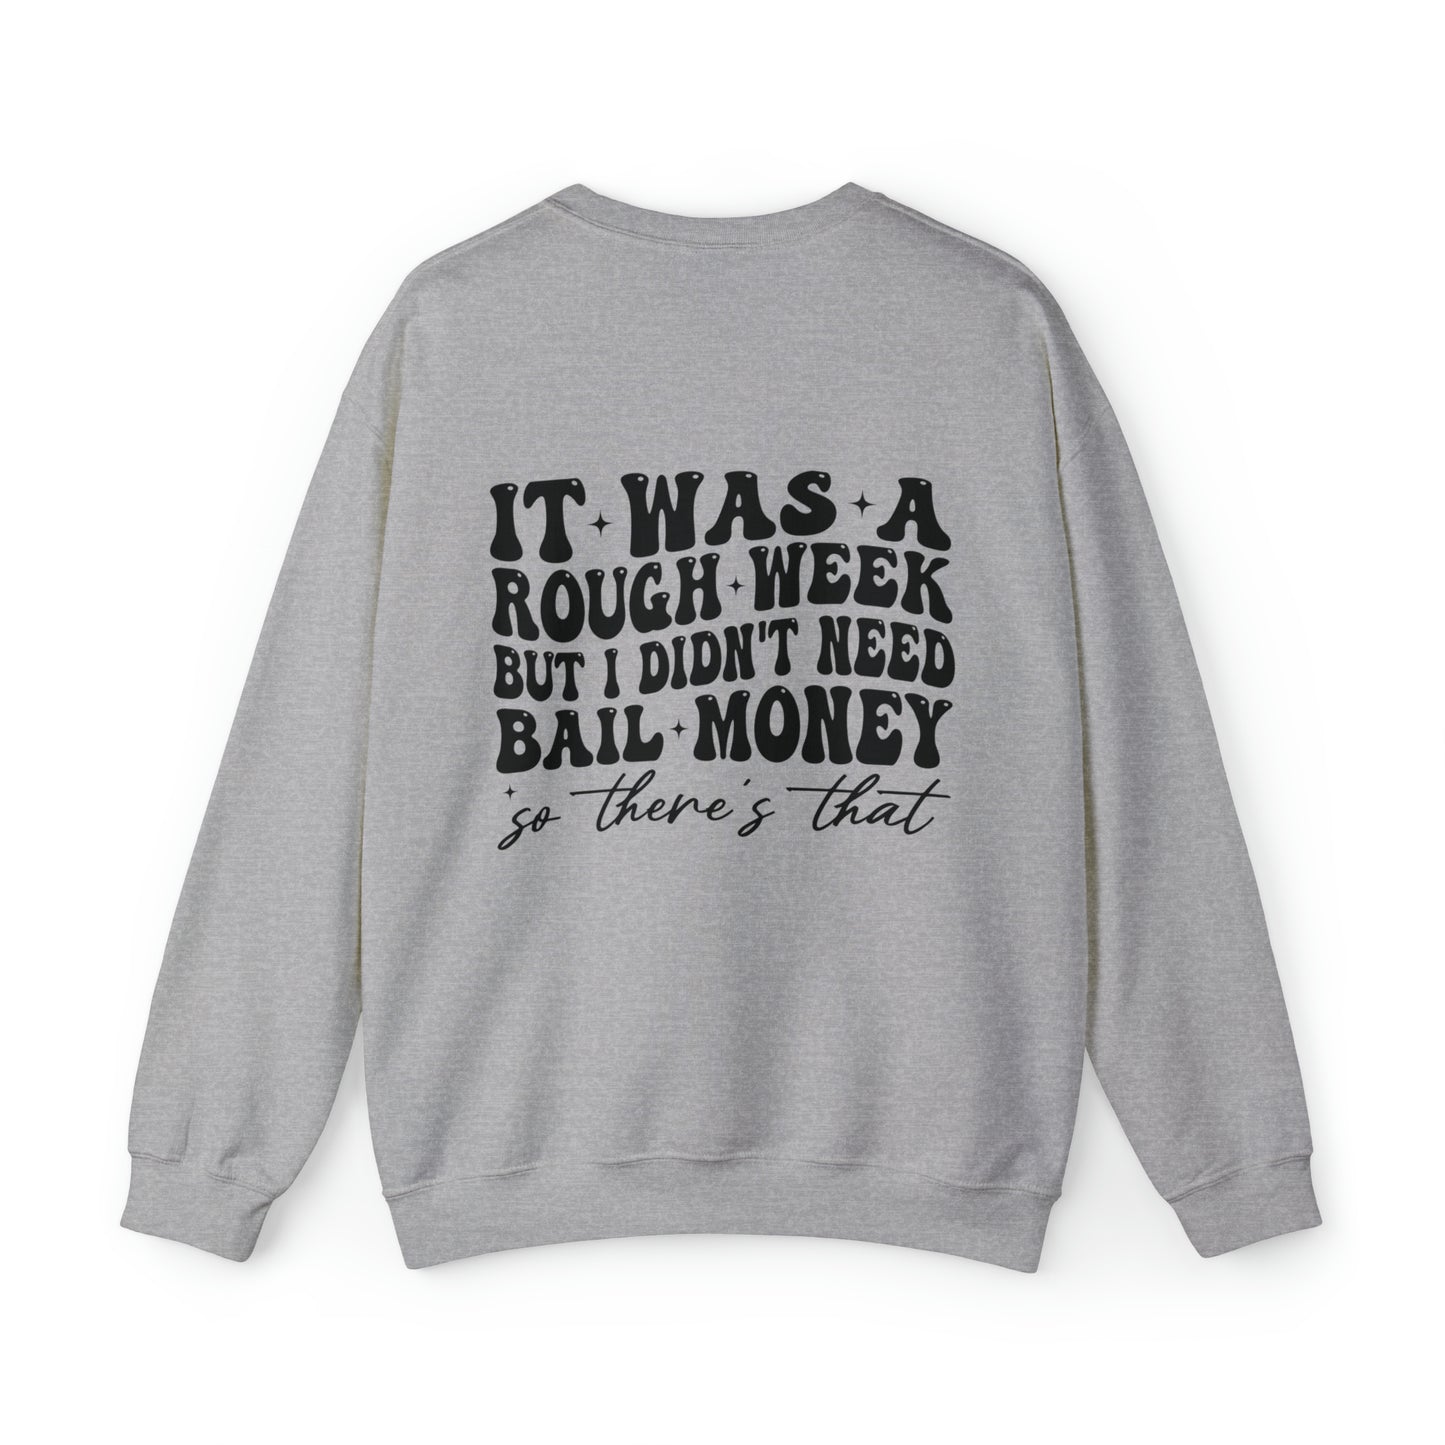 Didn't Need Bail Money Double Sided Sweatshirt